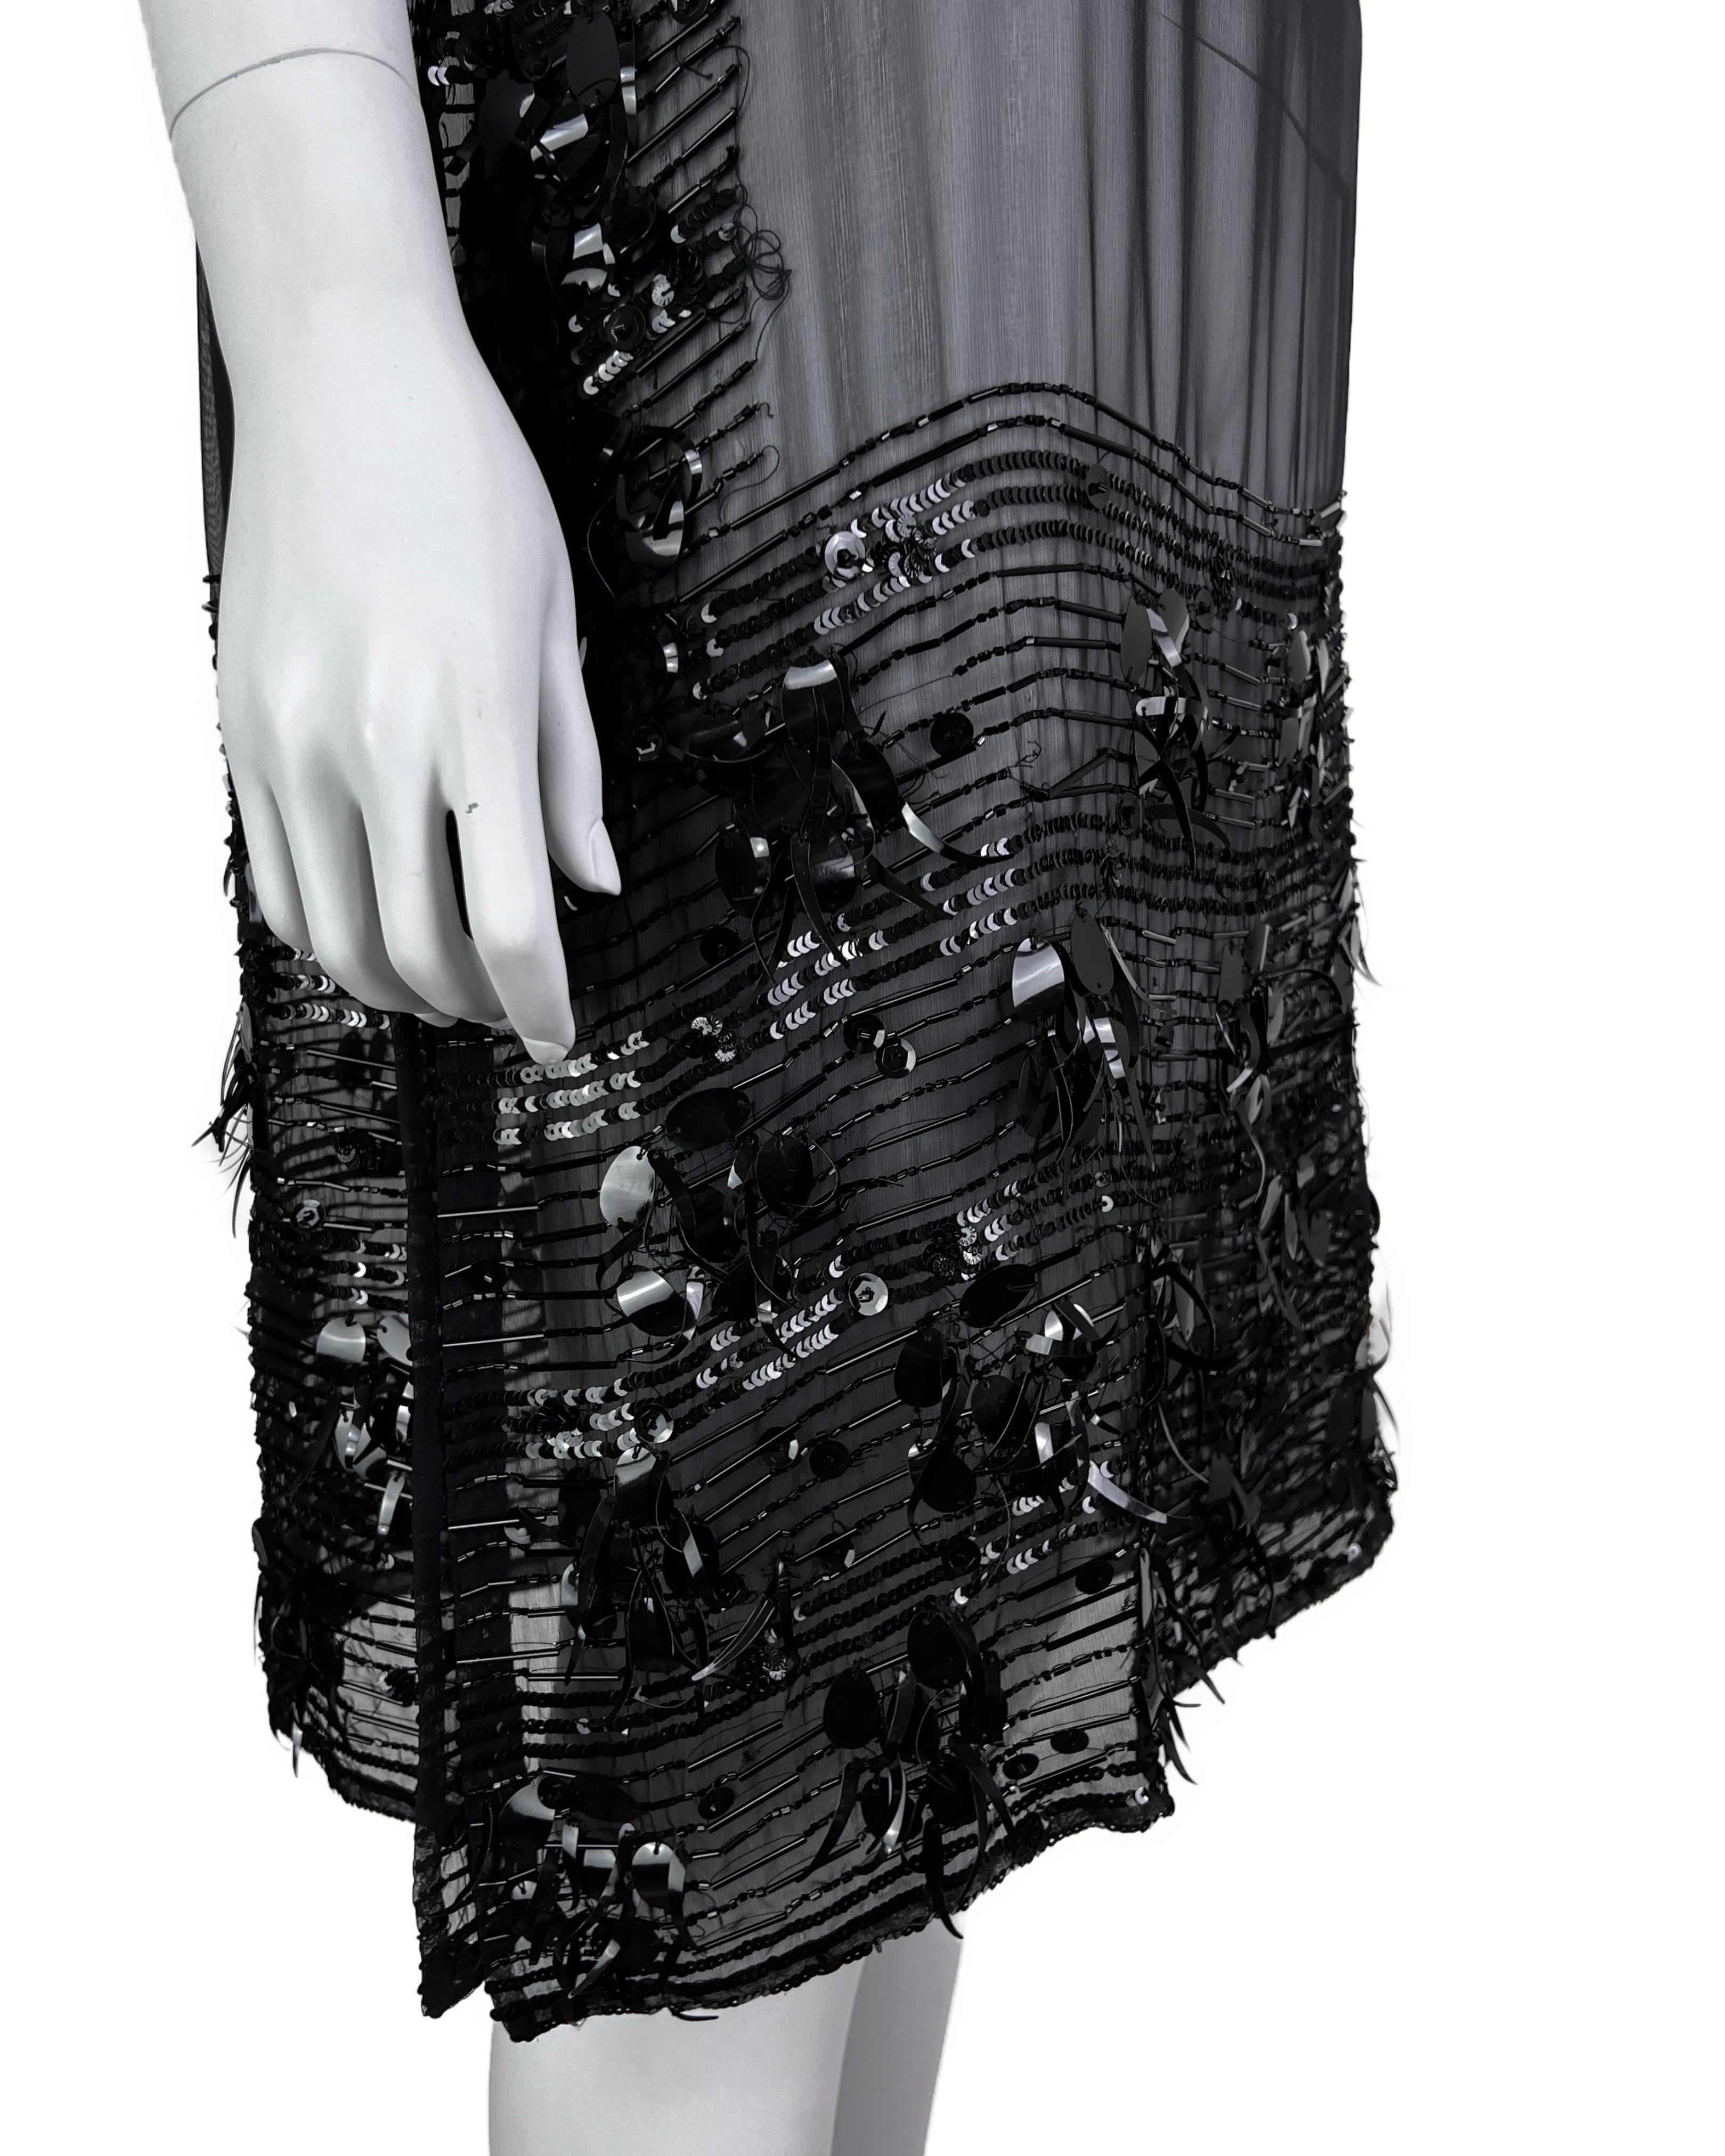 Jean-Paul Gaultier Fall 2004 Embellished Black Silk Chiffon Tunic Dress For Sale 3